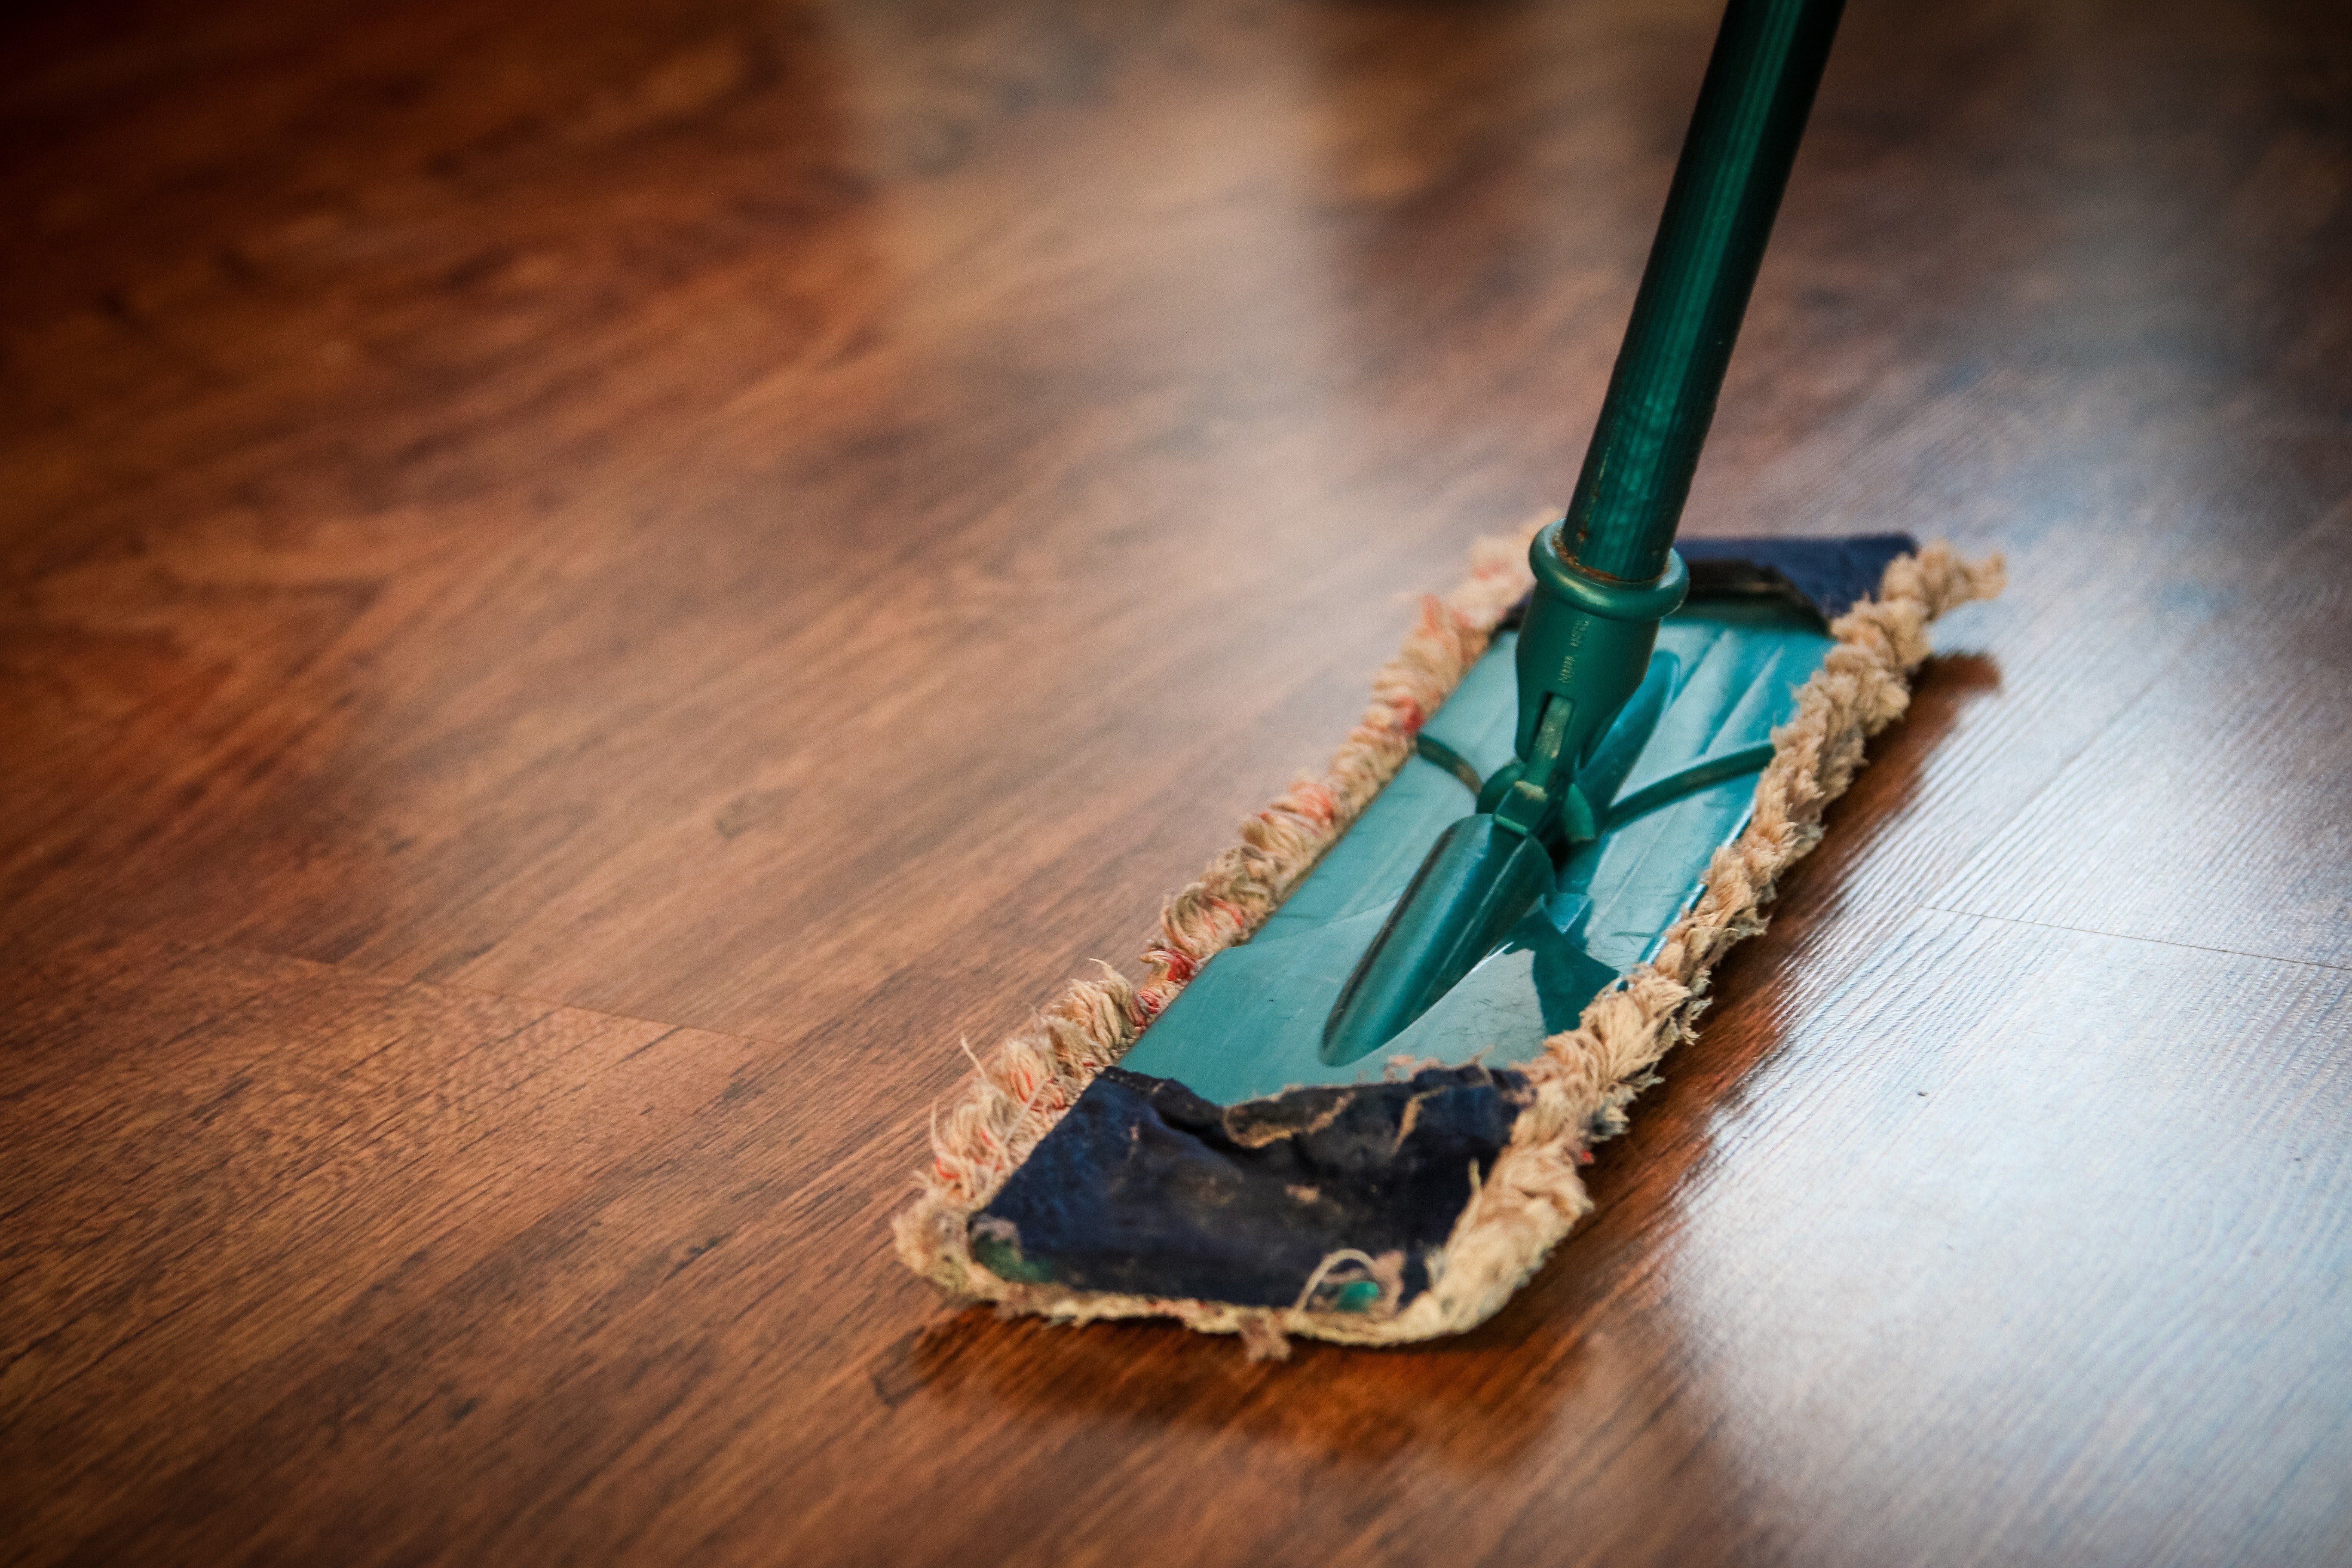 Mopping the floor. | Source: Pexels